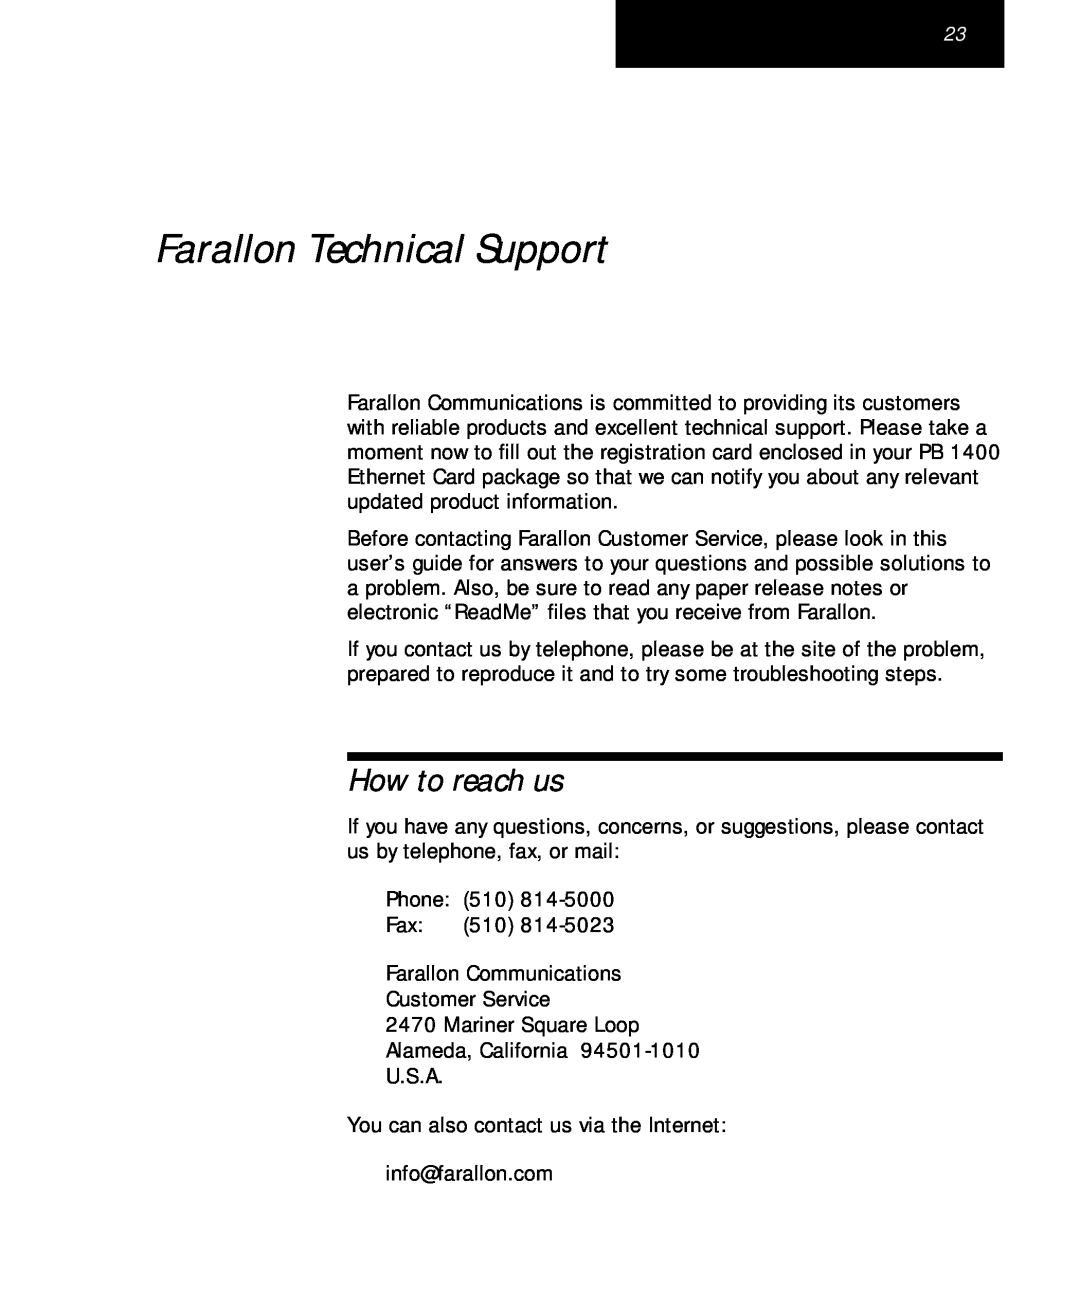 Farallon Communications PB 1400 appendix Farallon Technical Support, How to reach us 